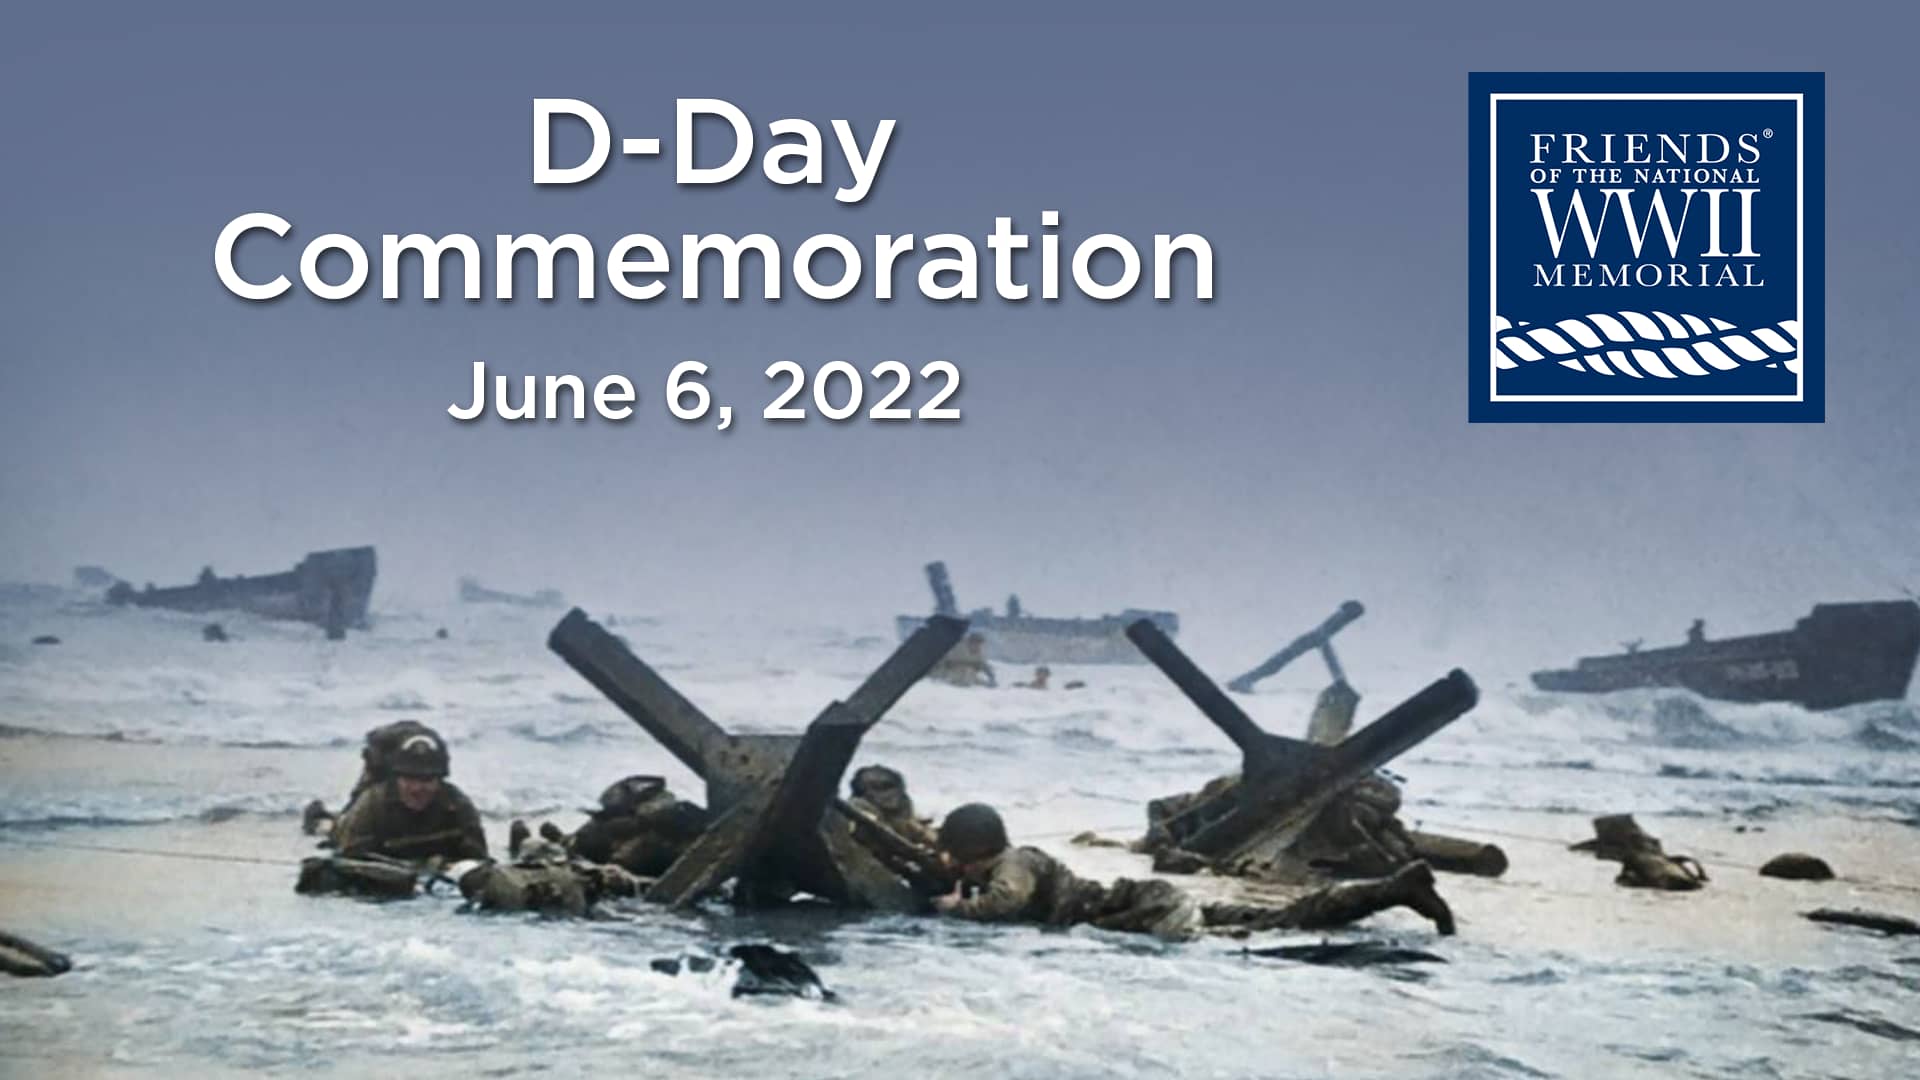 DDay Commemoration 2022 on Vimeo